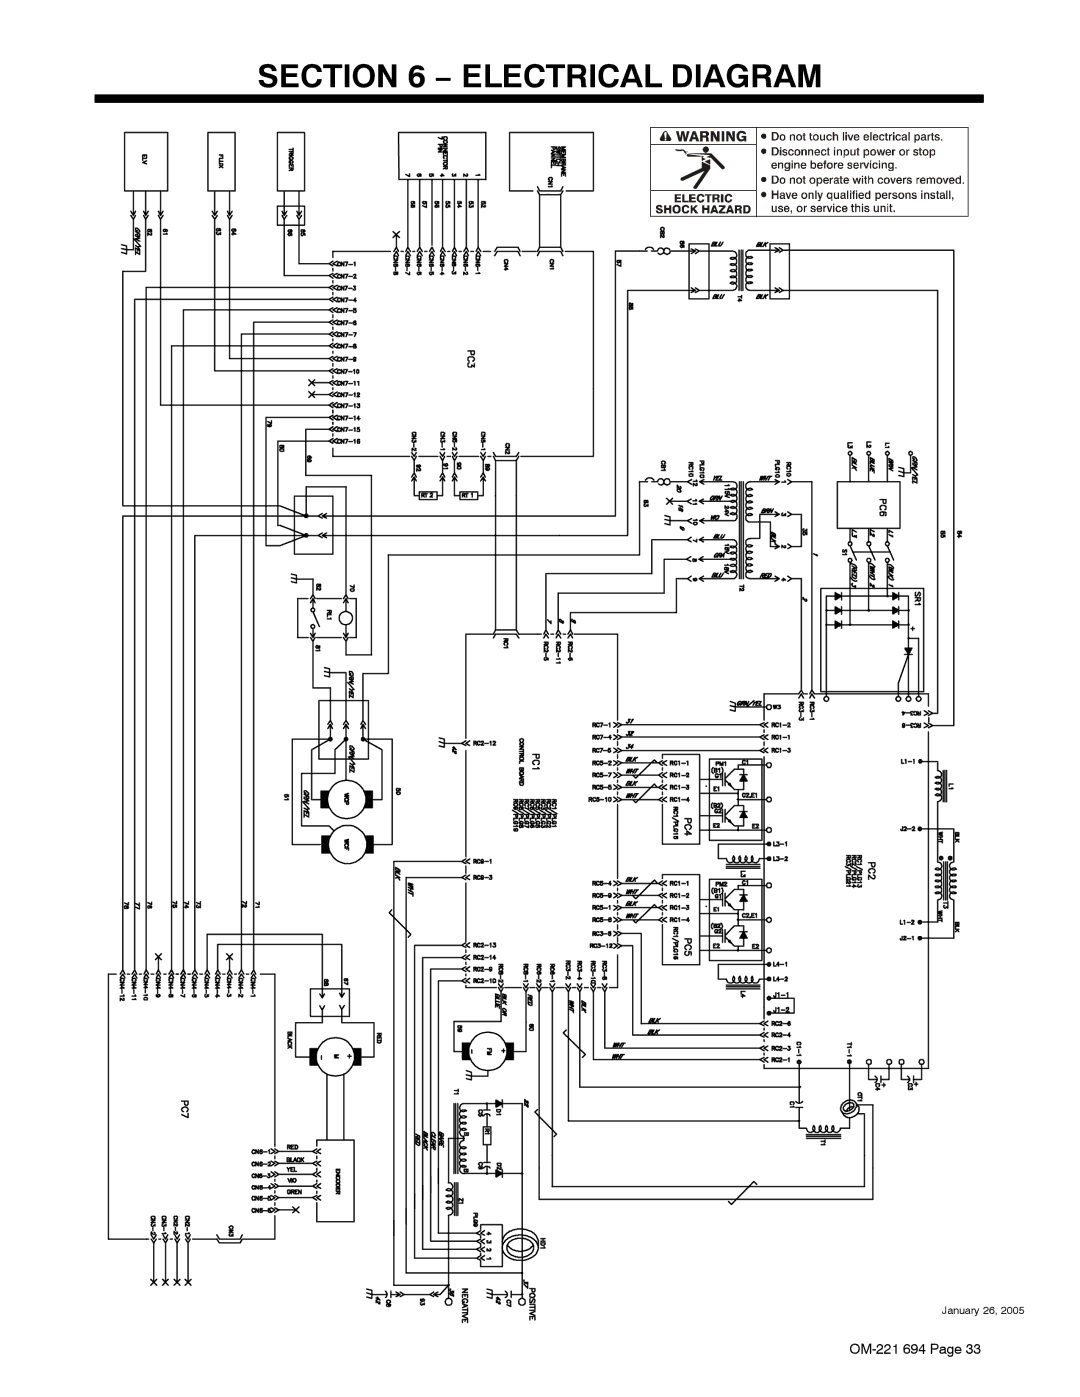 Miller Electric XMC 4000 manual Electrical Diagram 